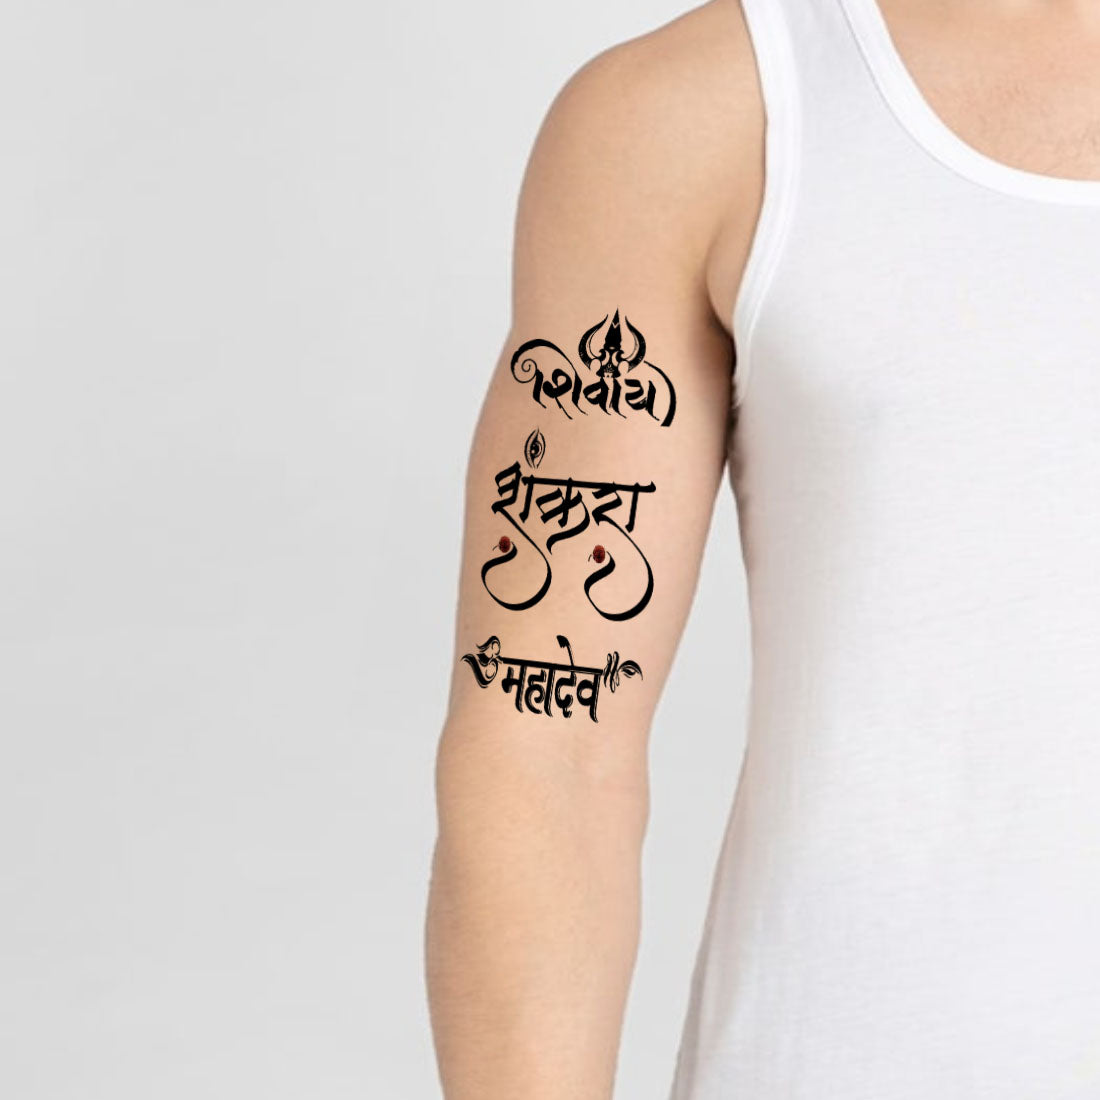 shivay' in Tattoos • Search in +1.3M Tattoos Now • Tattoodo